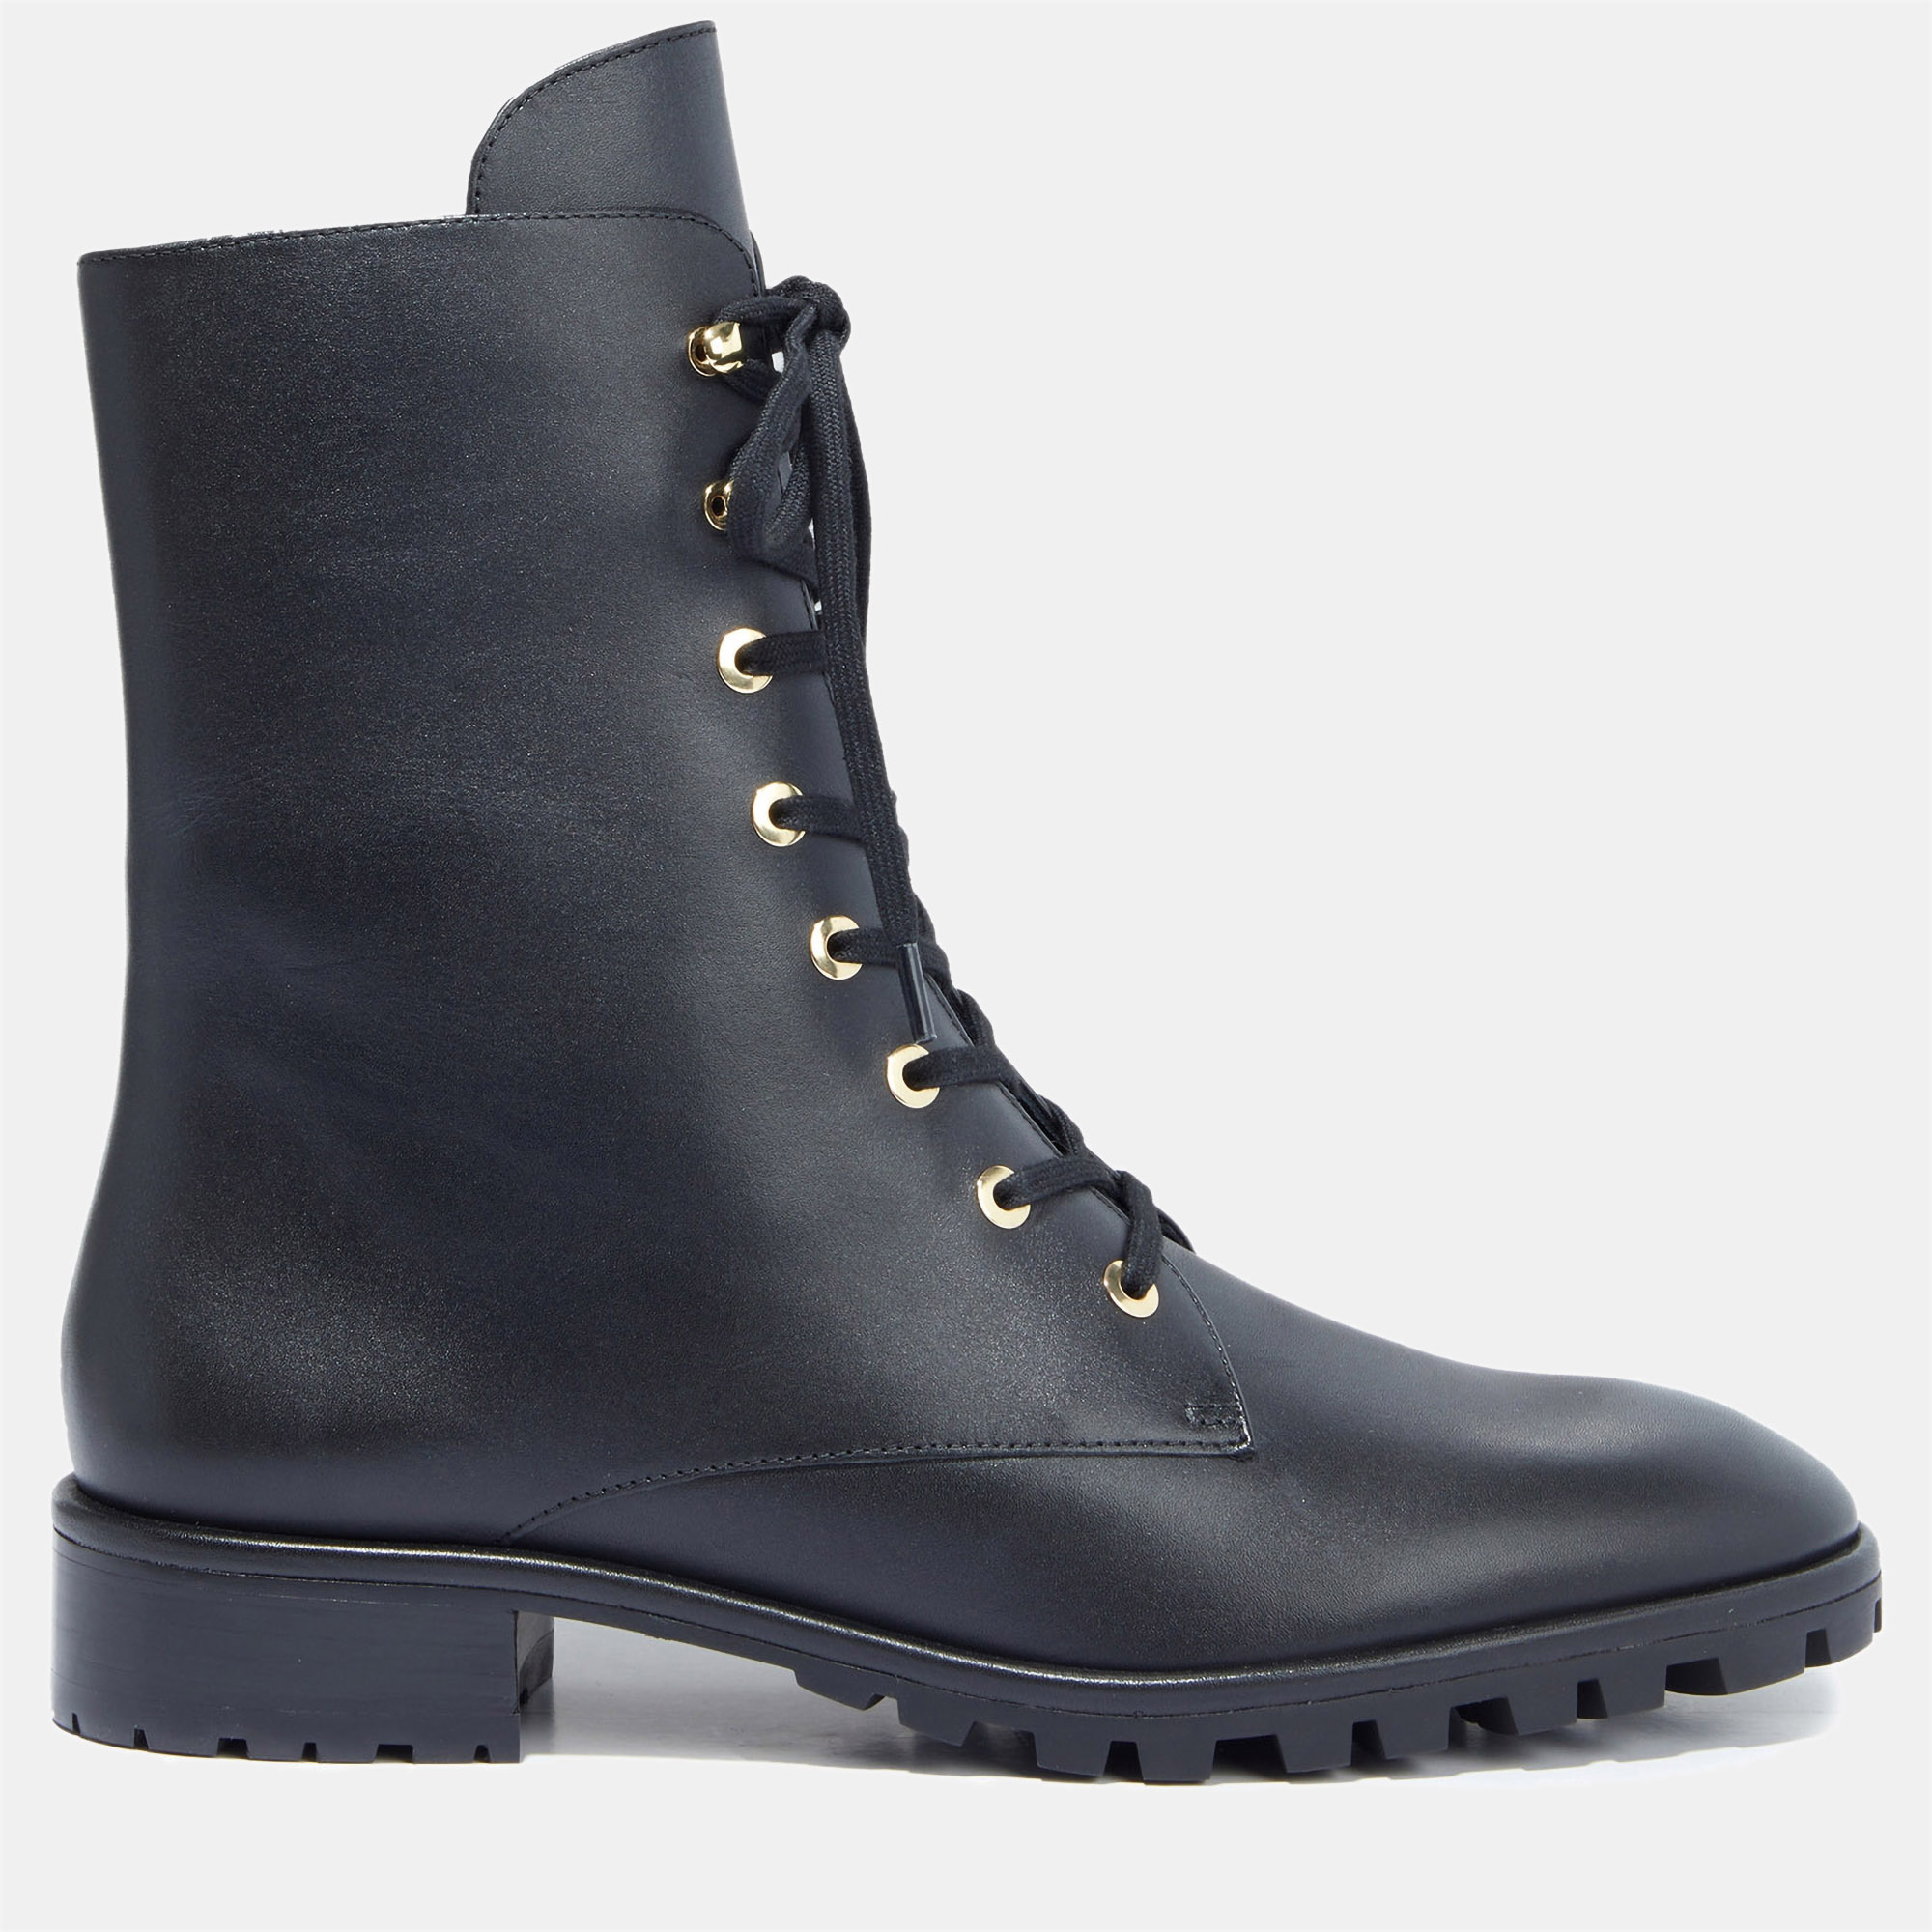 Stuart weitzman leather ankle boots size39